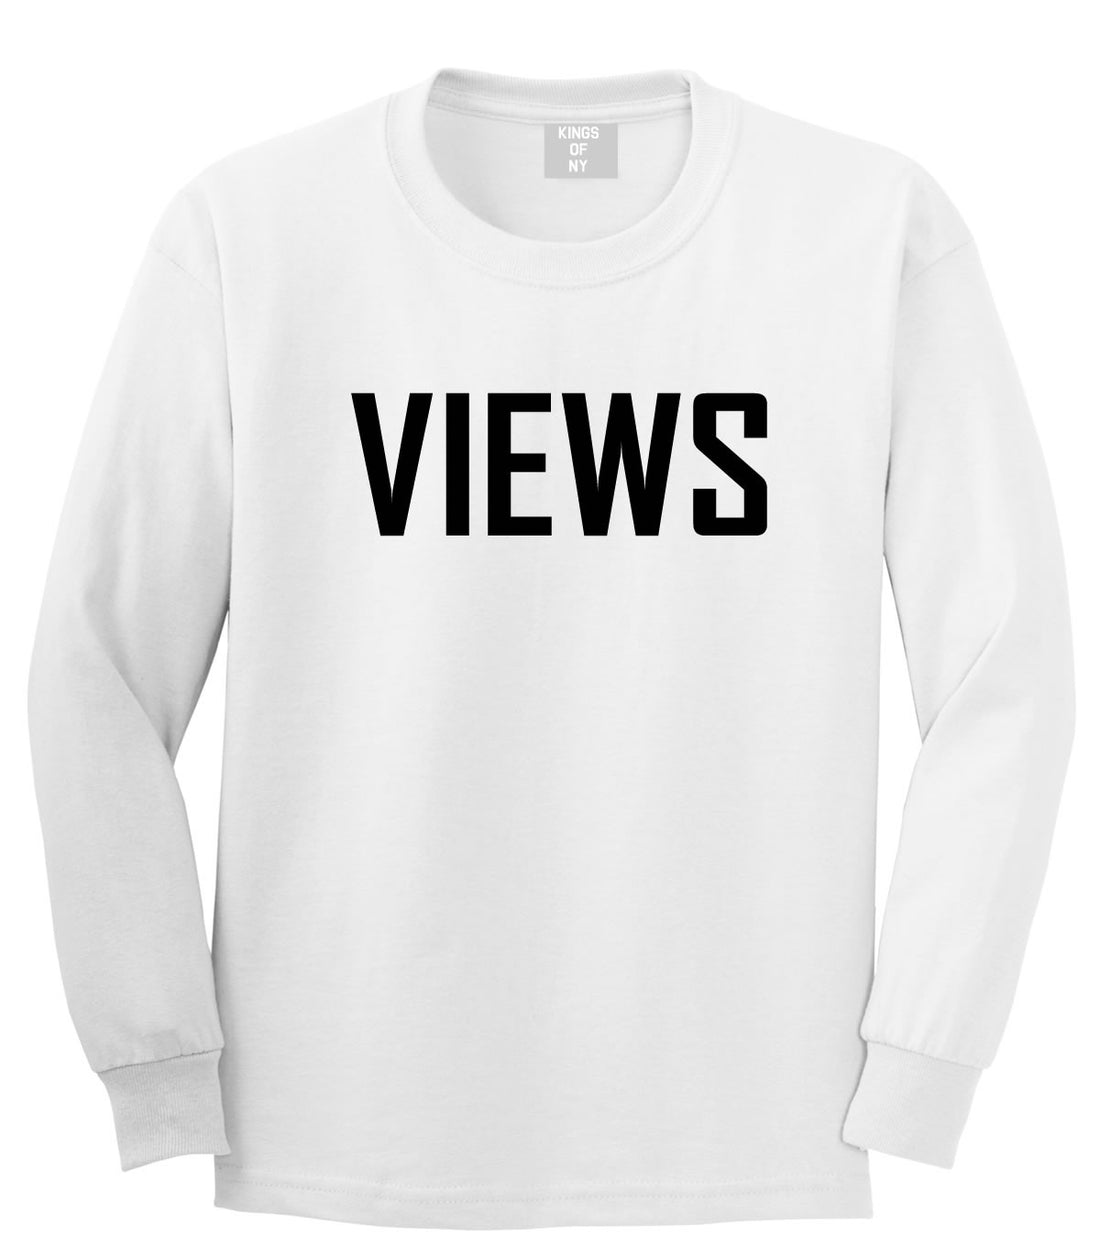 Views Long Sleeve T-Shirt by Kings Of NY